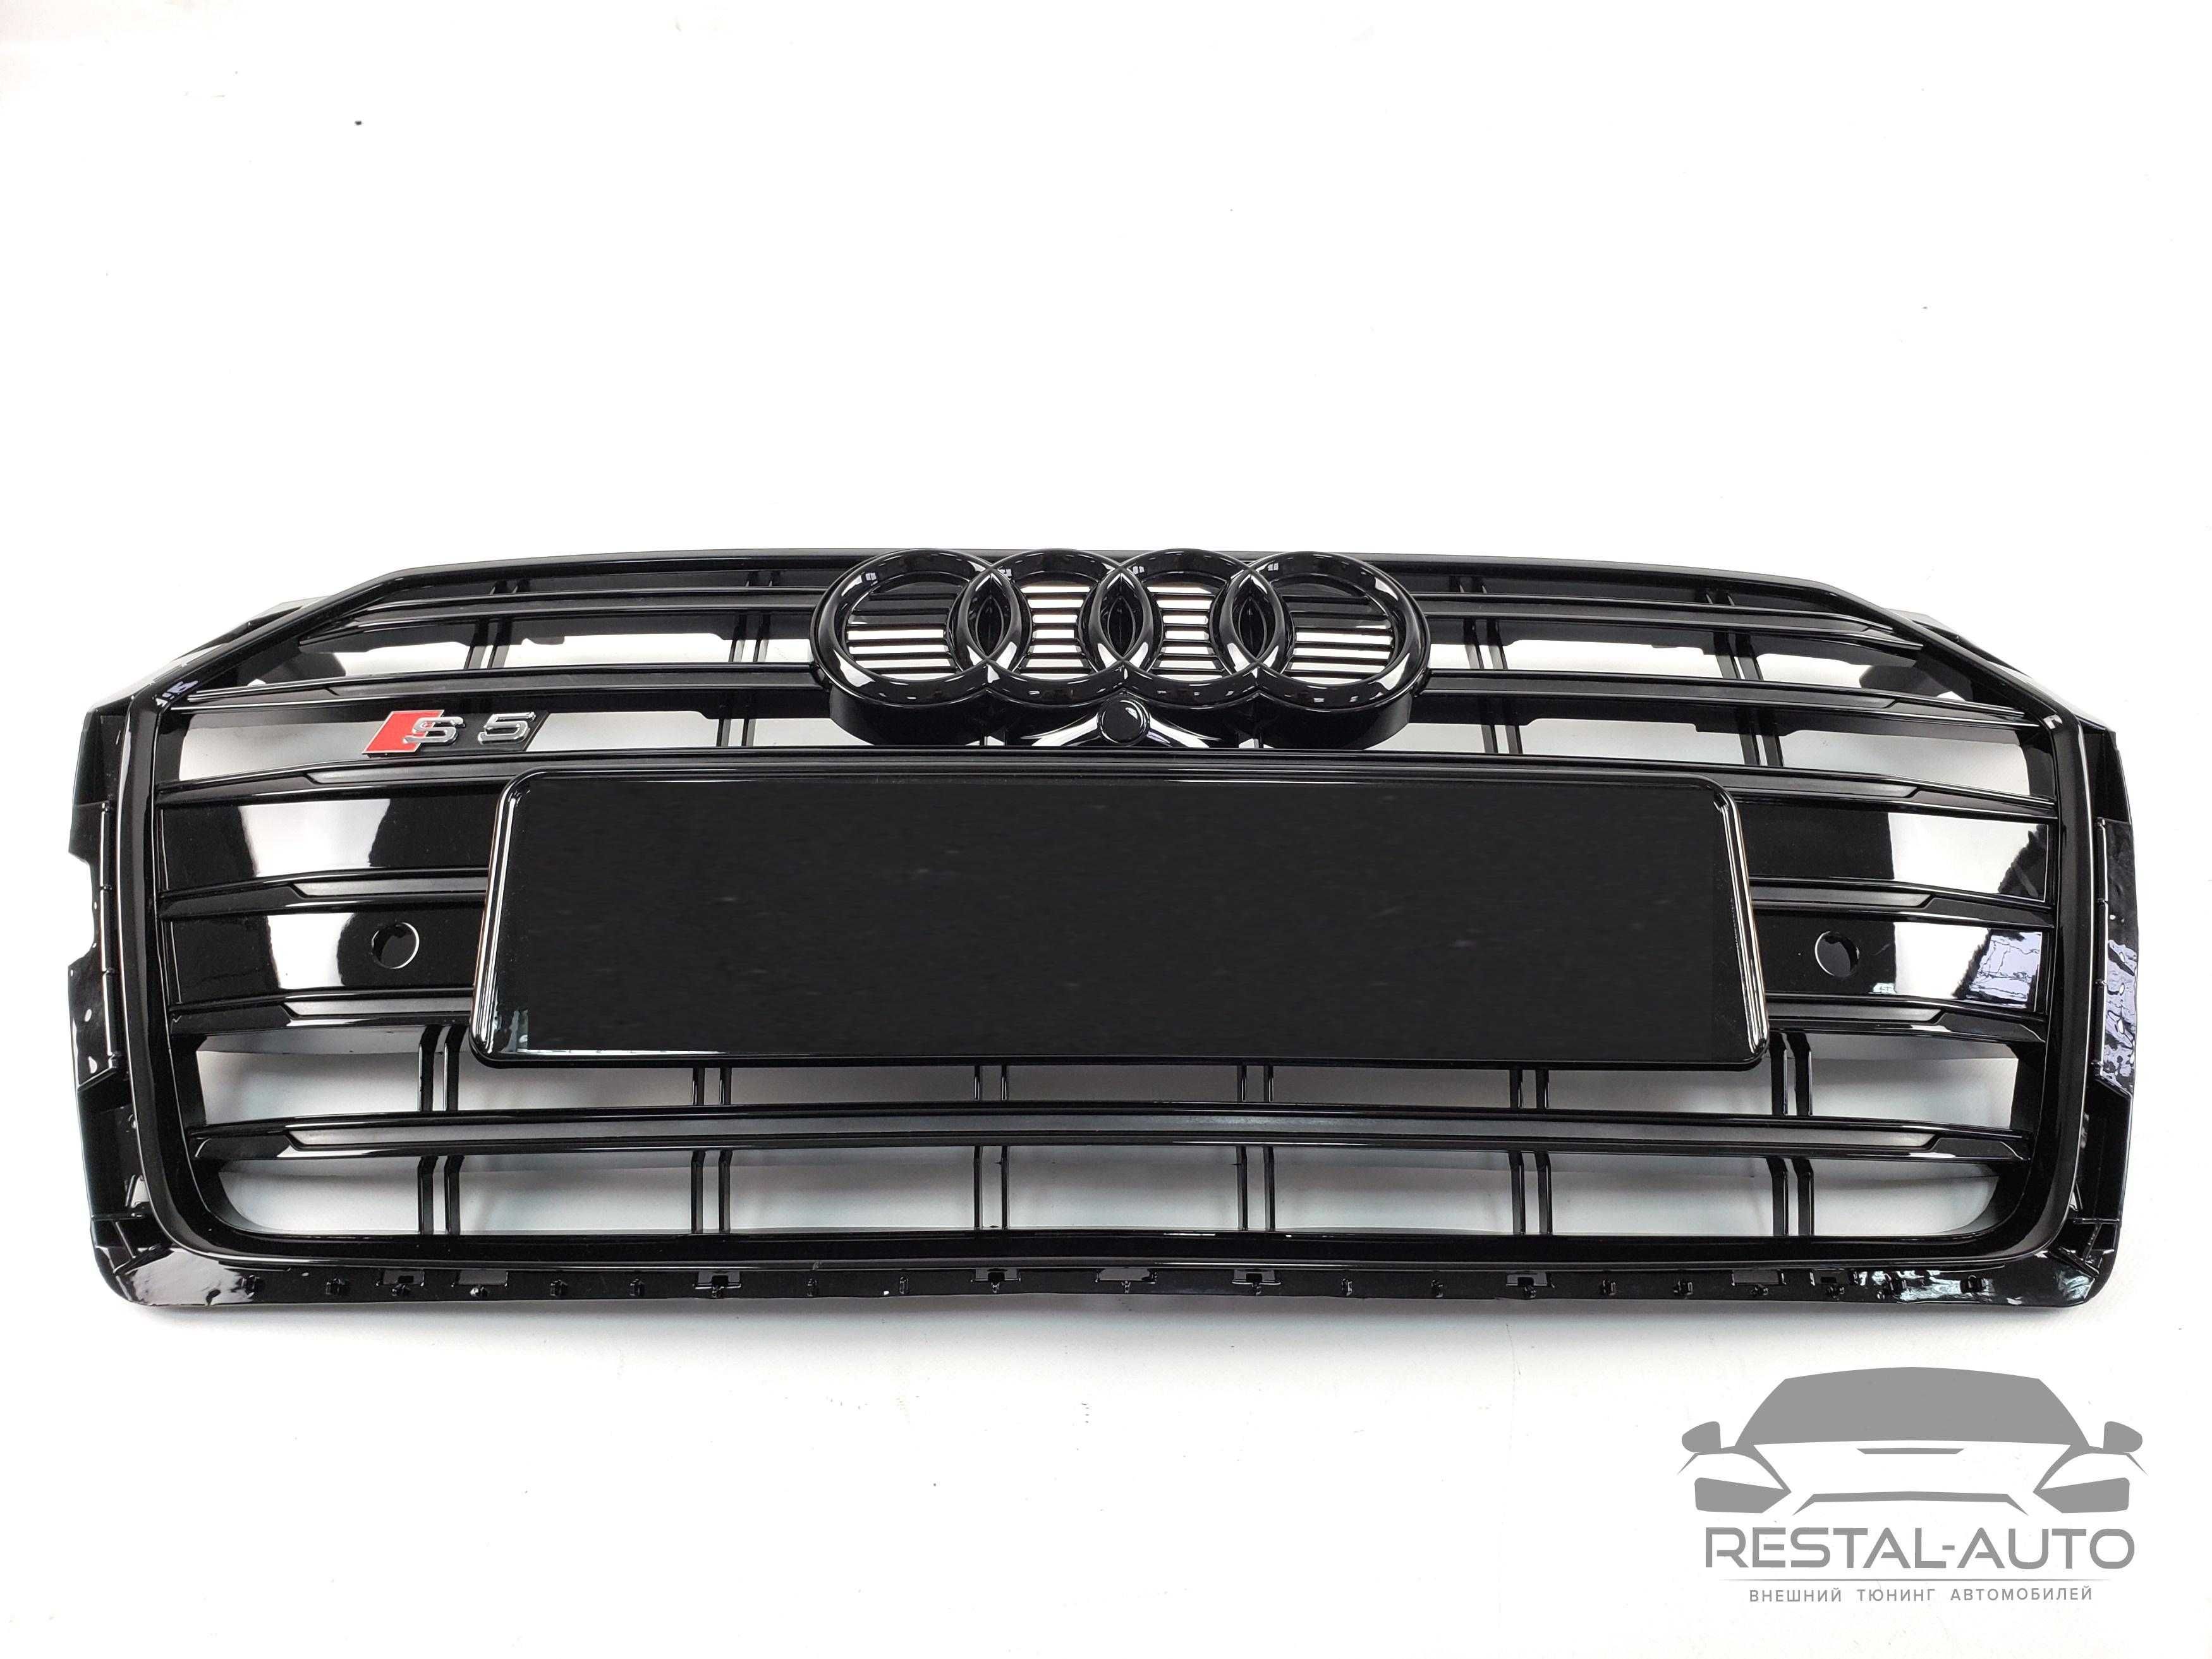 Решетка радиатора на Audi A5  2016-2020 год в стиле S-line